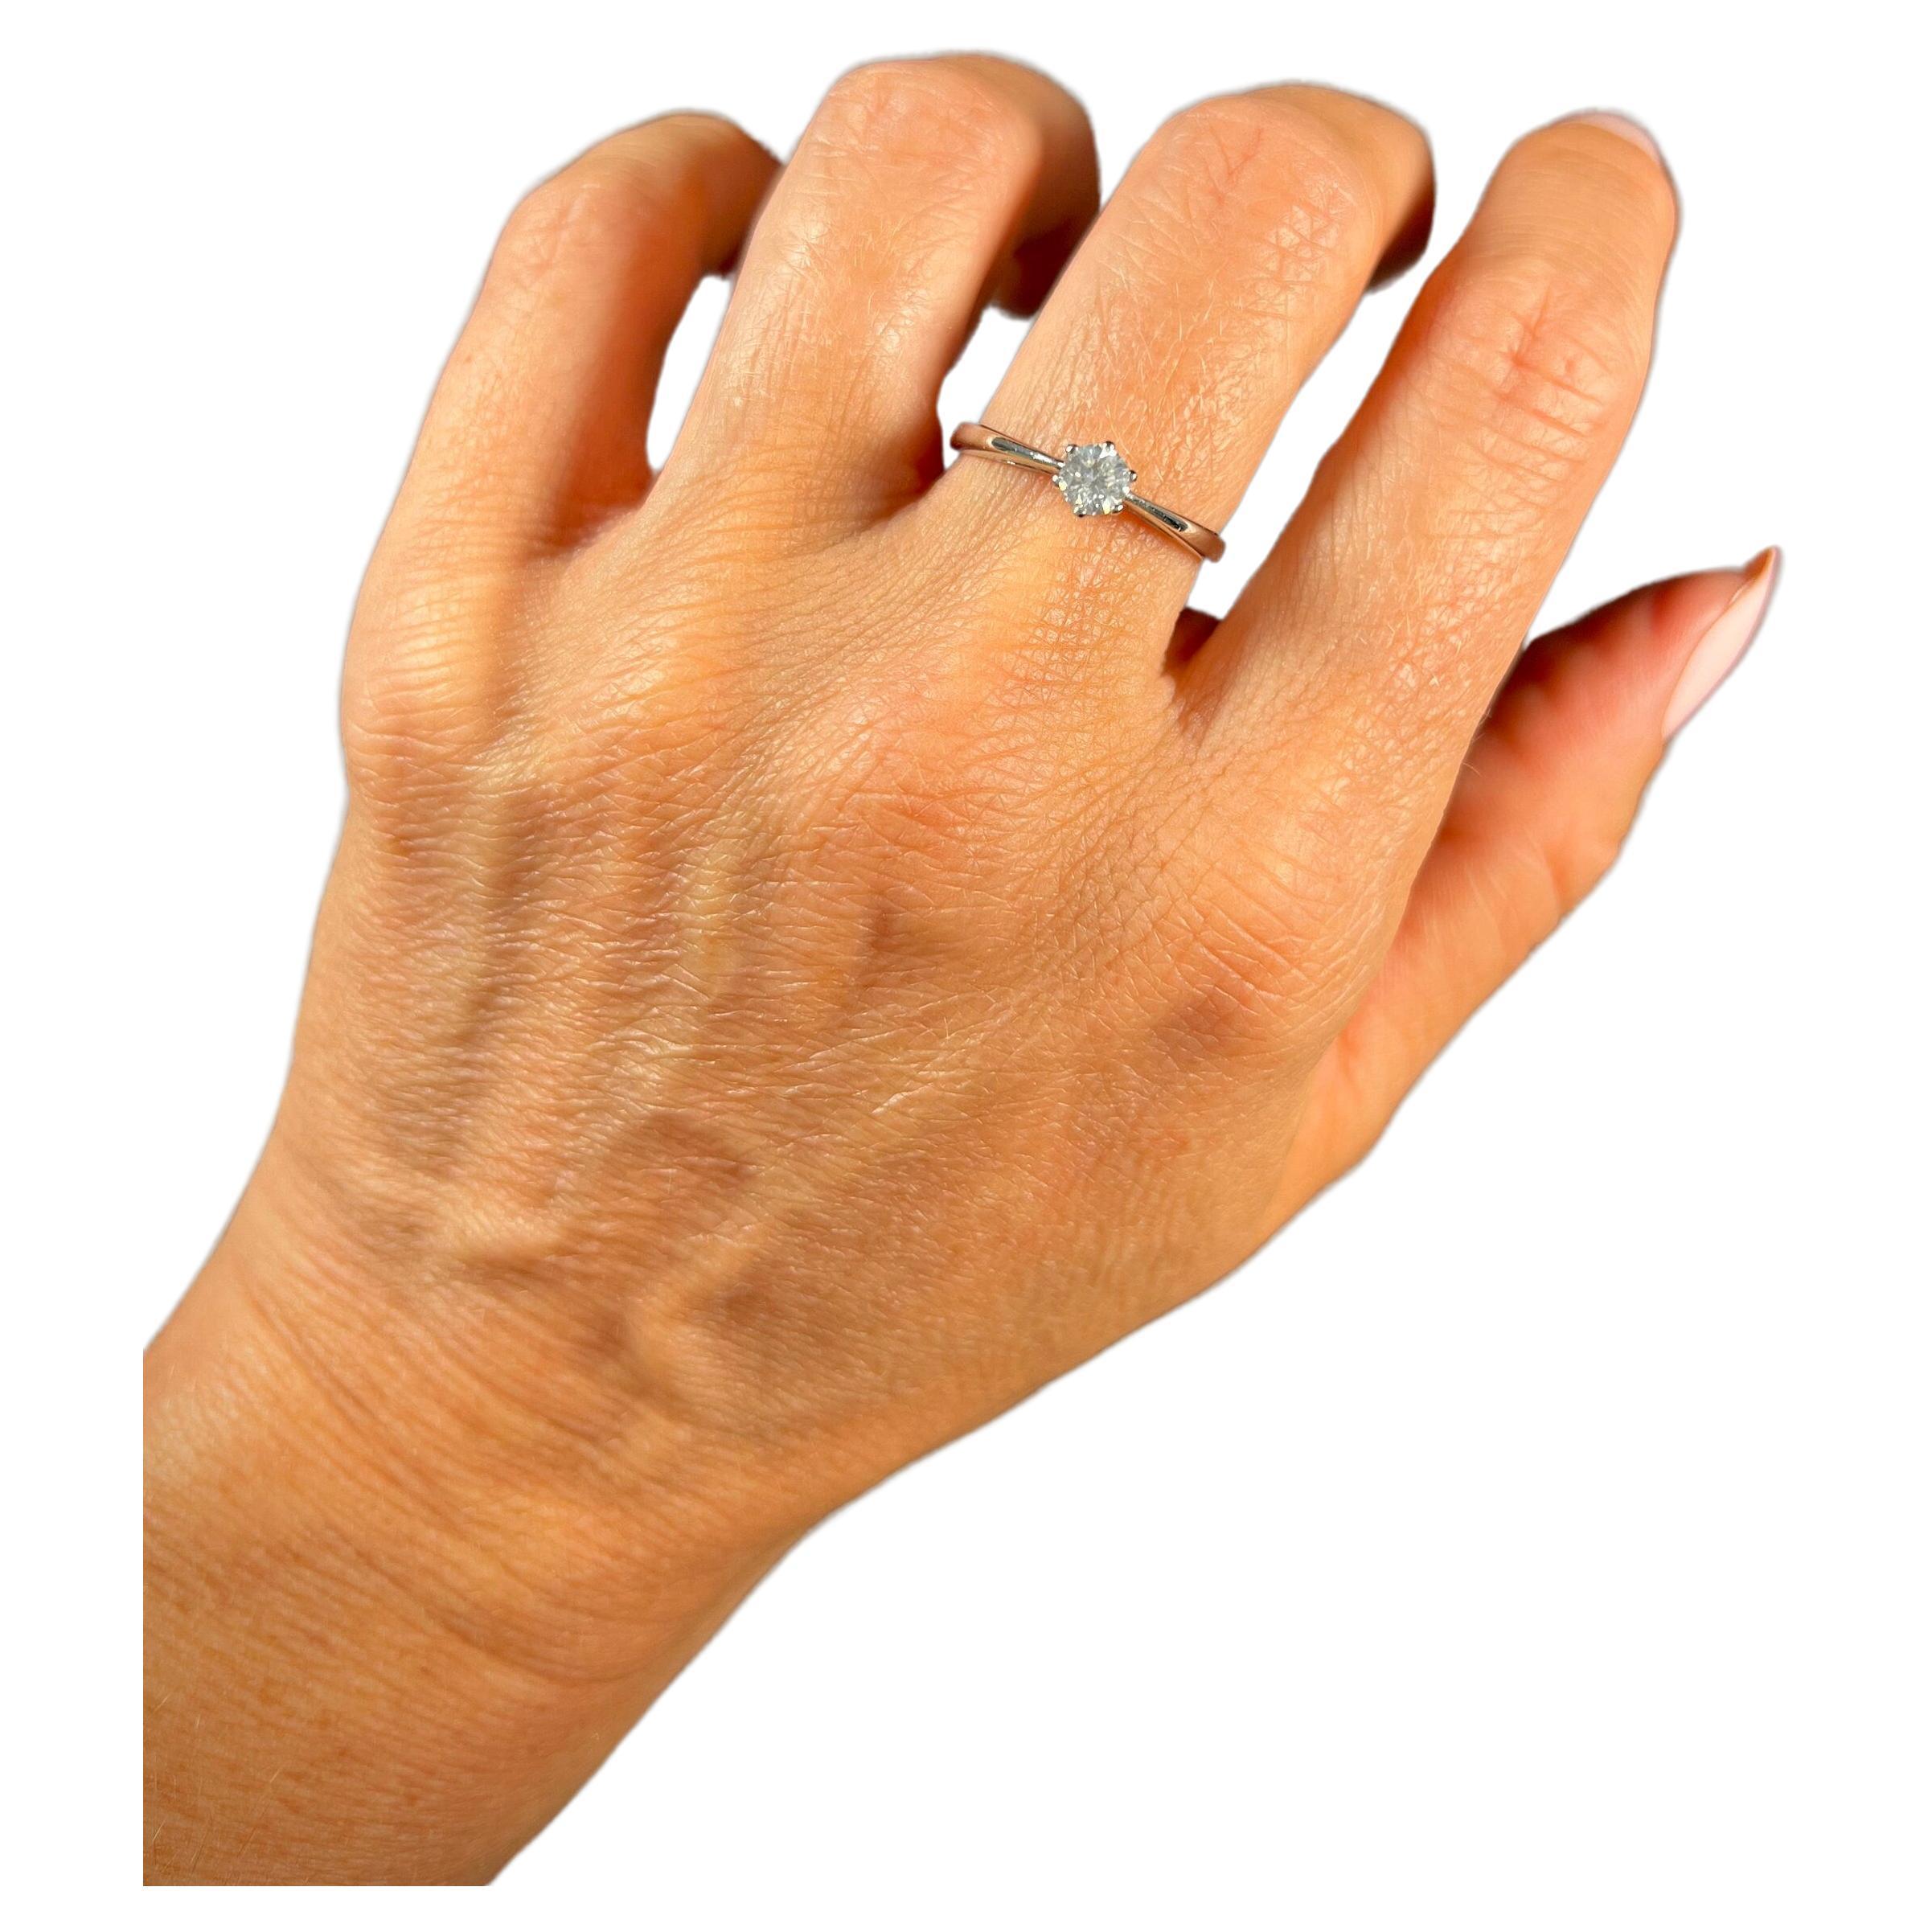 Vintage 1980’s 18ct White Gold, Diamond Single Stone Engagement Ring